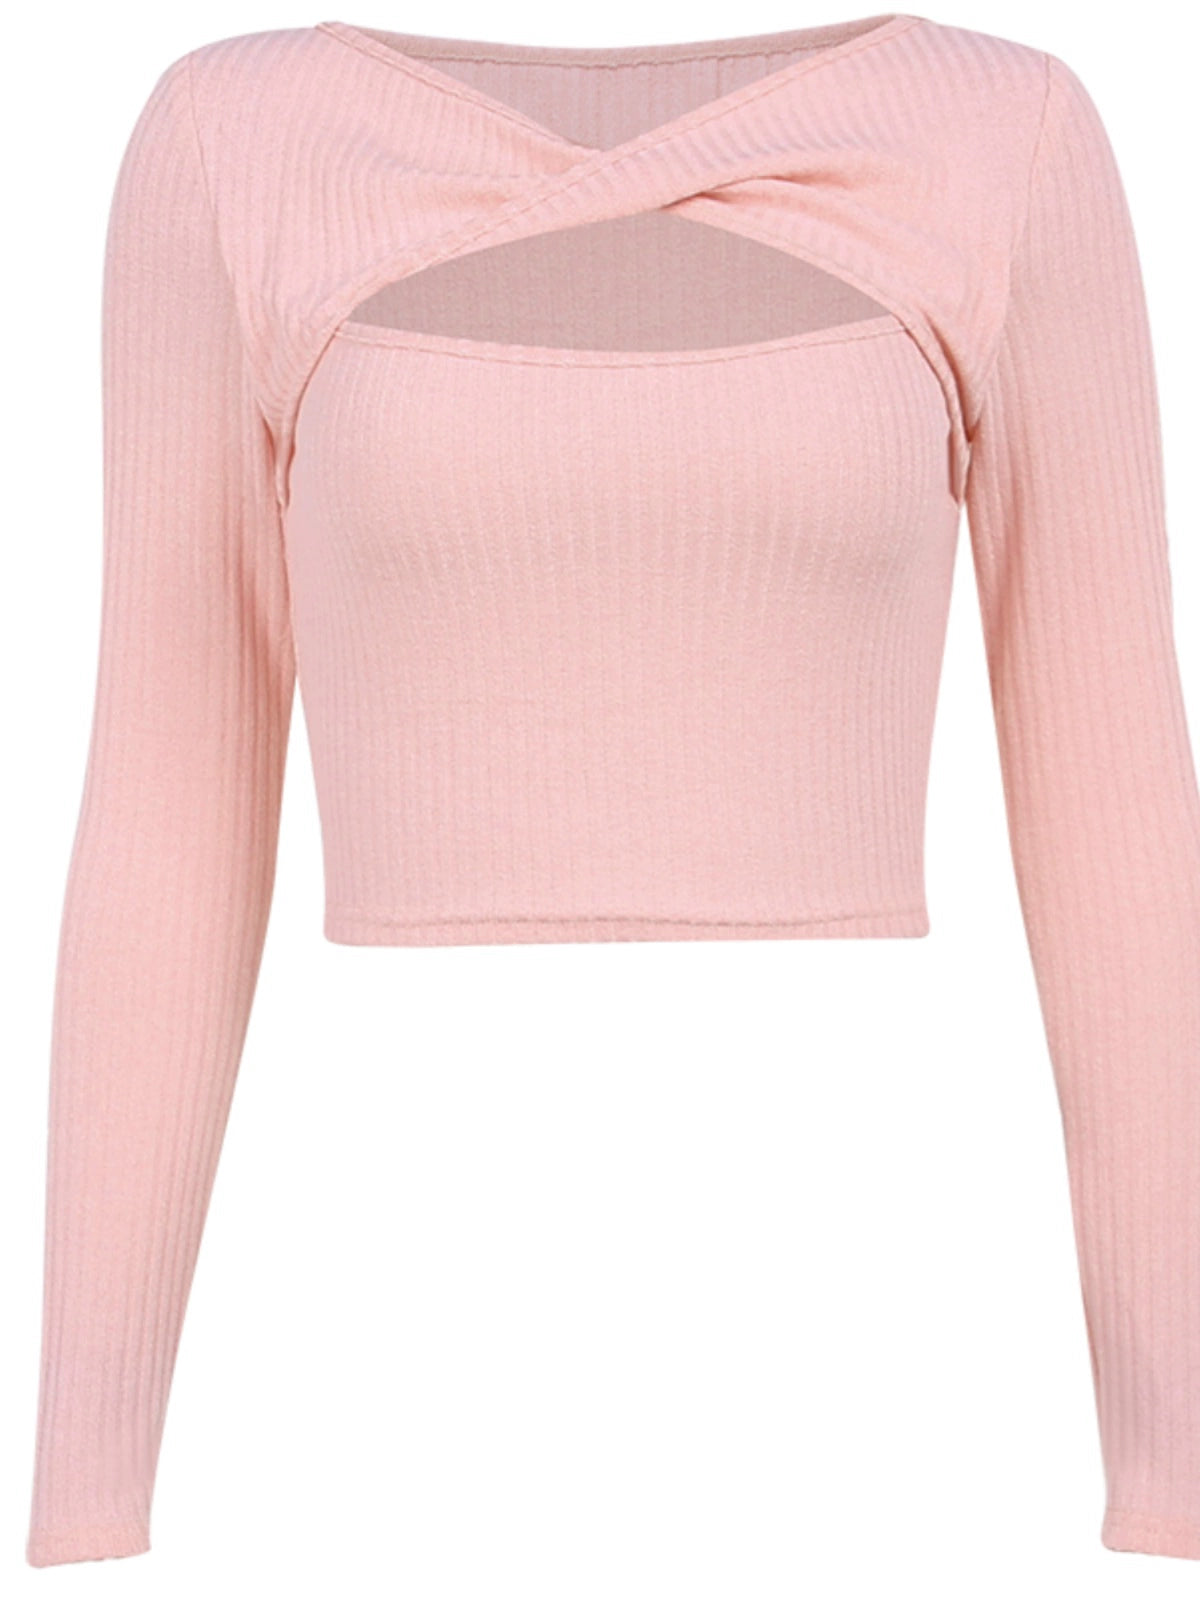 LaPose Fashion - Alexa Knitted Top - Asymmetric Tops, Basic Tops, Elegant Tops, Knitted Tops, Long Sleeve Tops, Tops, Warm Tops, Winter E